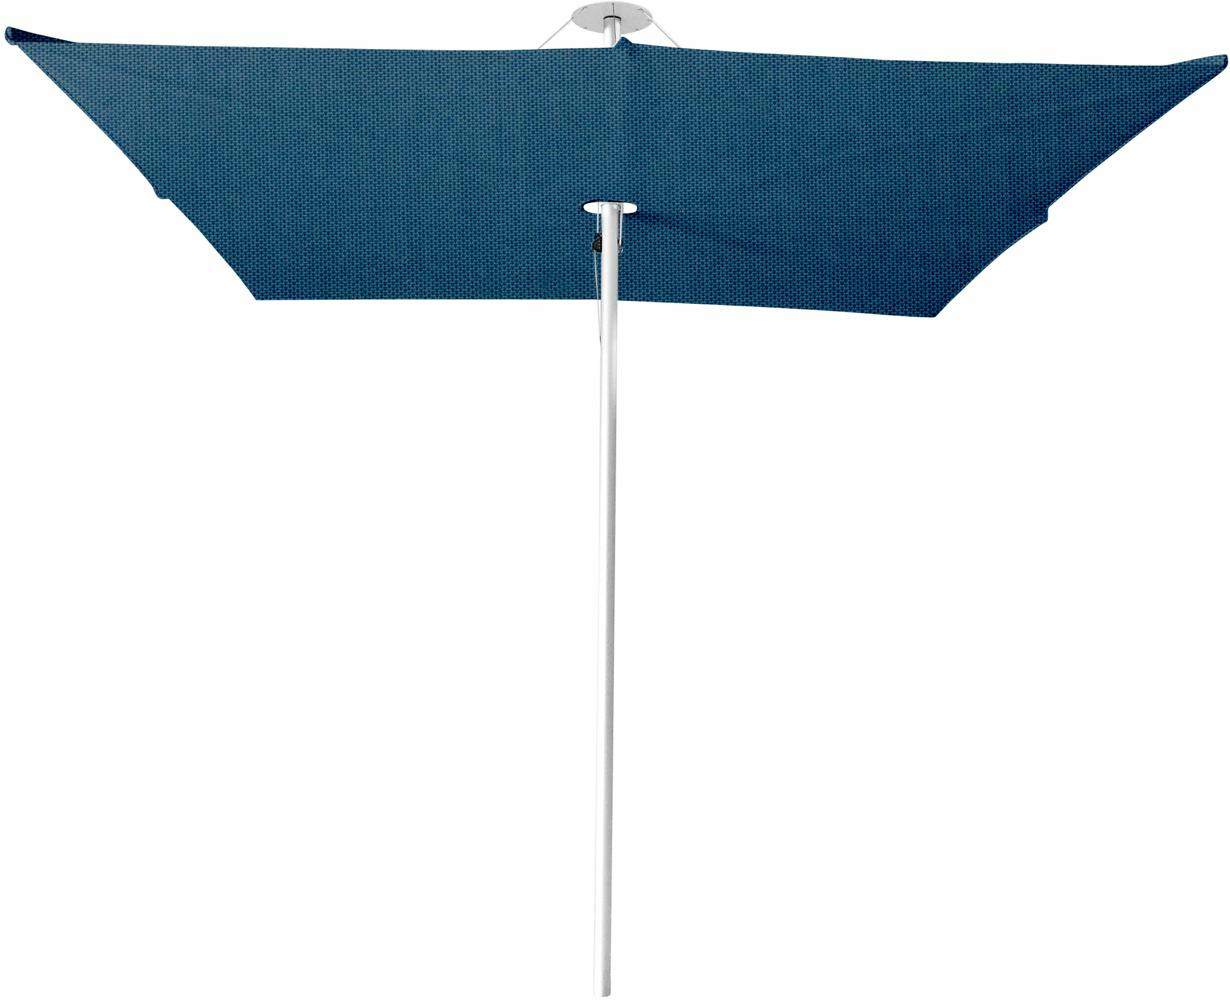 Infina center post umbrella, 2,5 m square, with frame in Aluminum and Solidum BlueStorm canopy. 